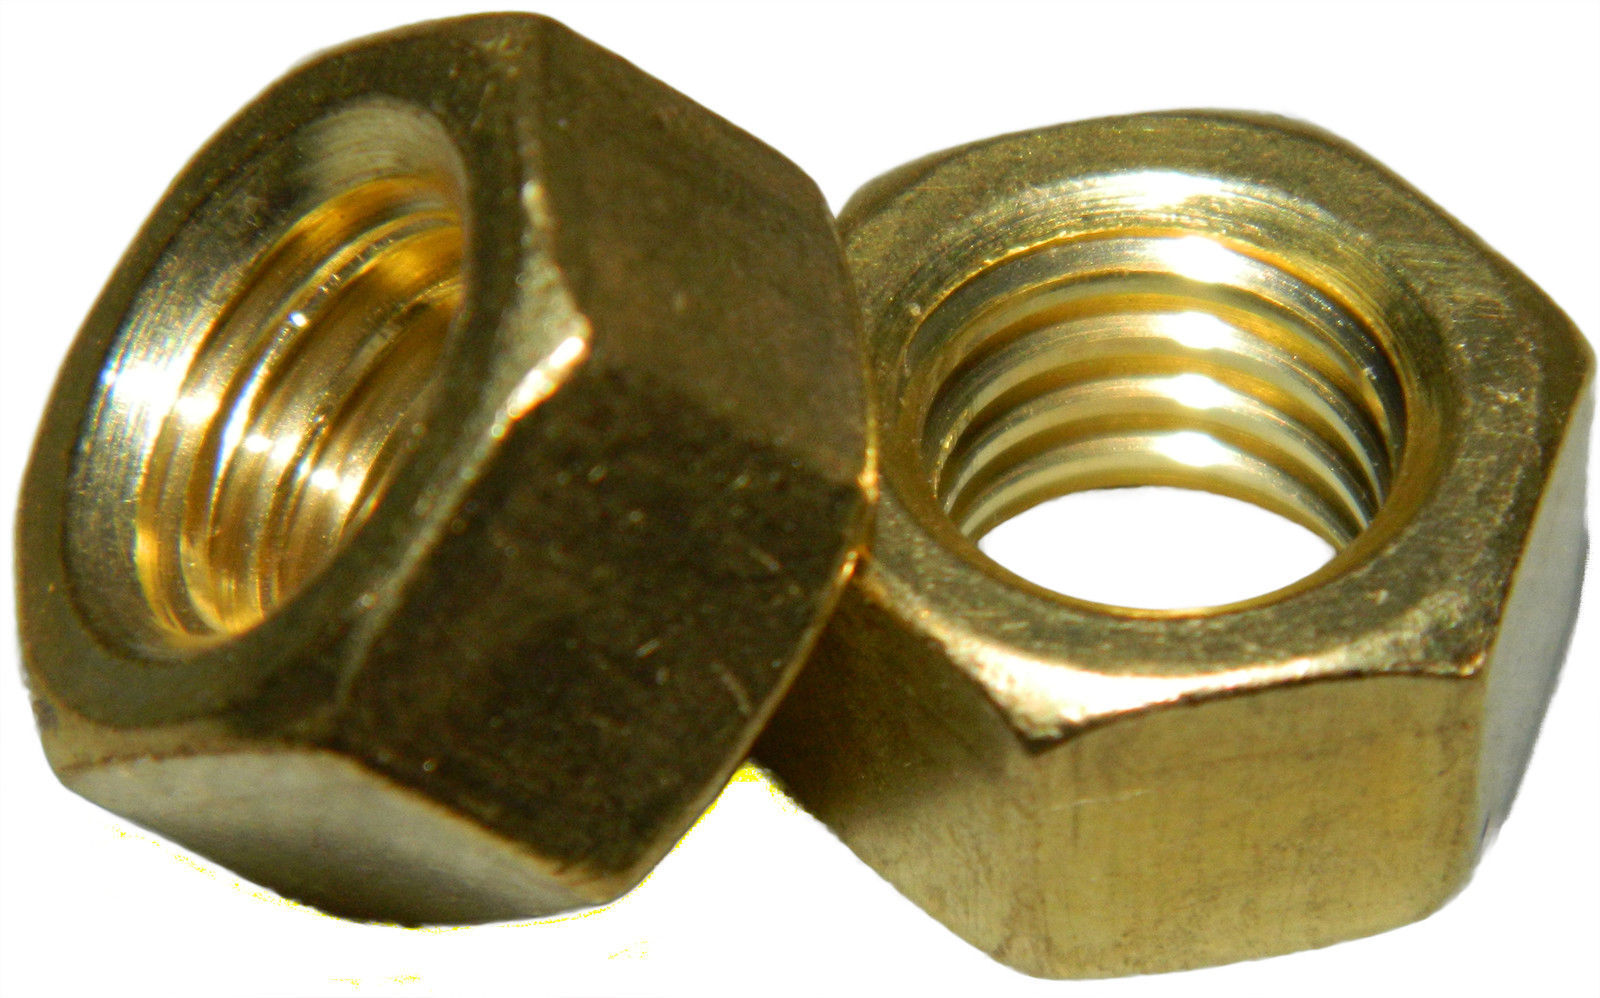 Solid Brass Machine Screw hex nuts 1/4-20 Qty 50